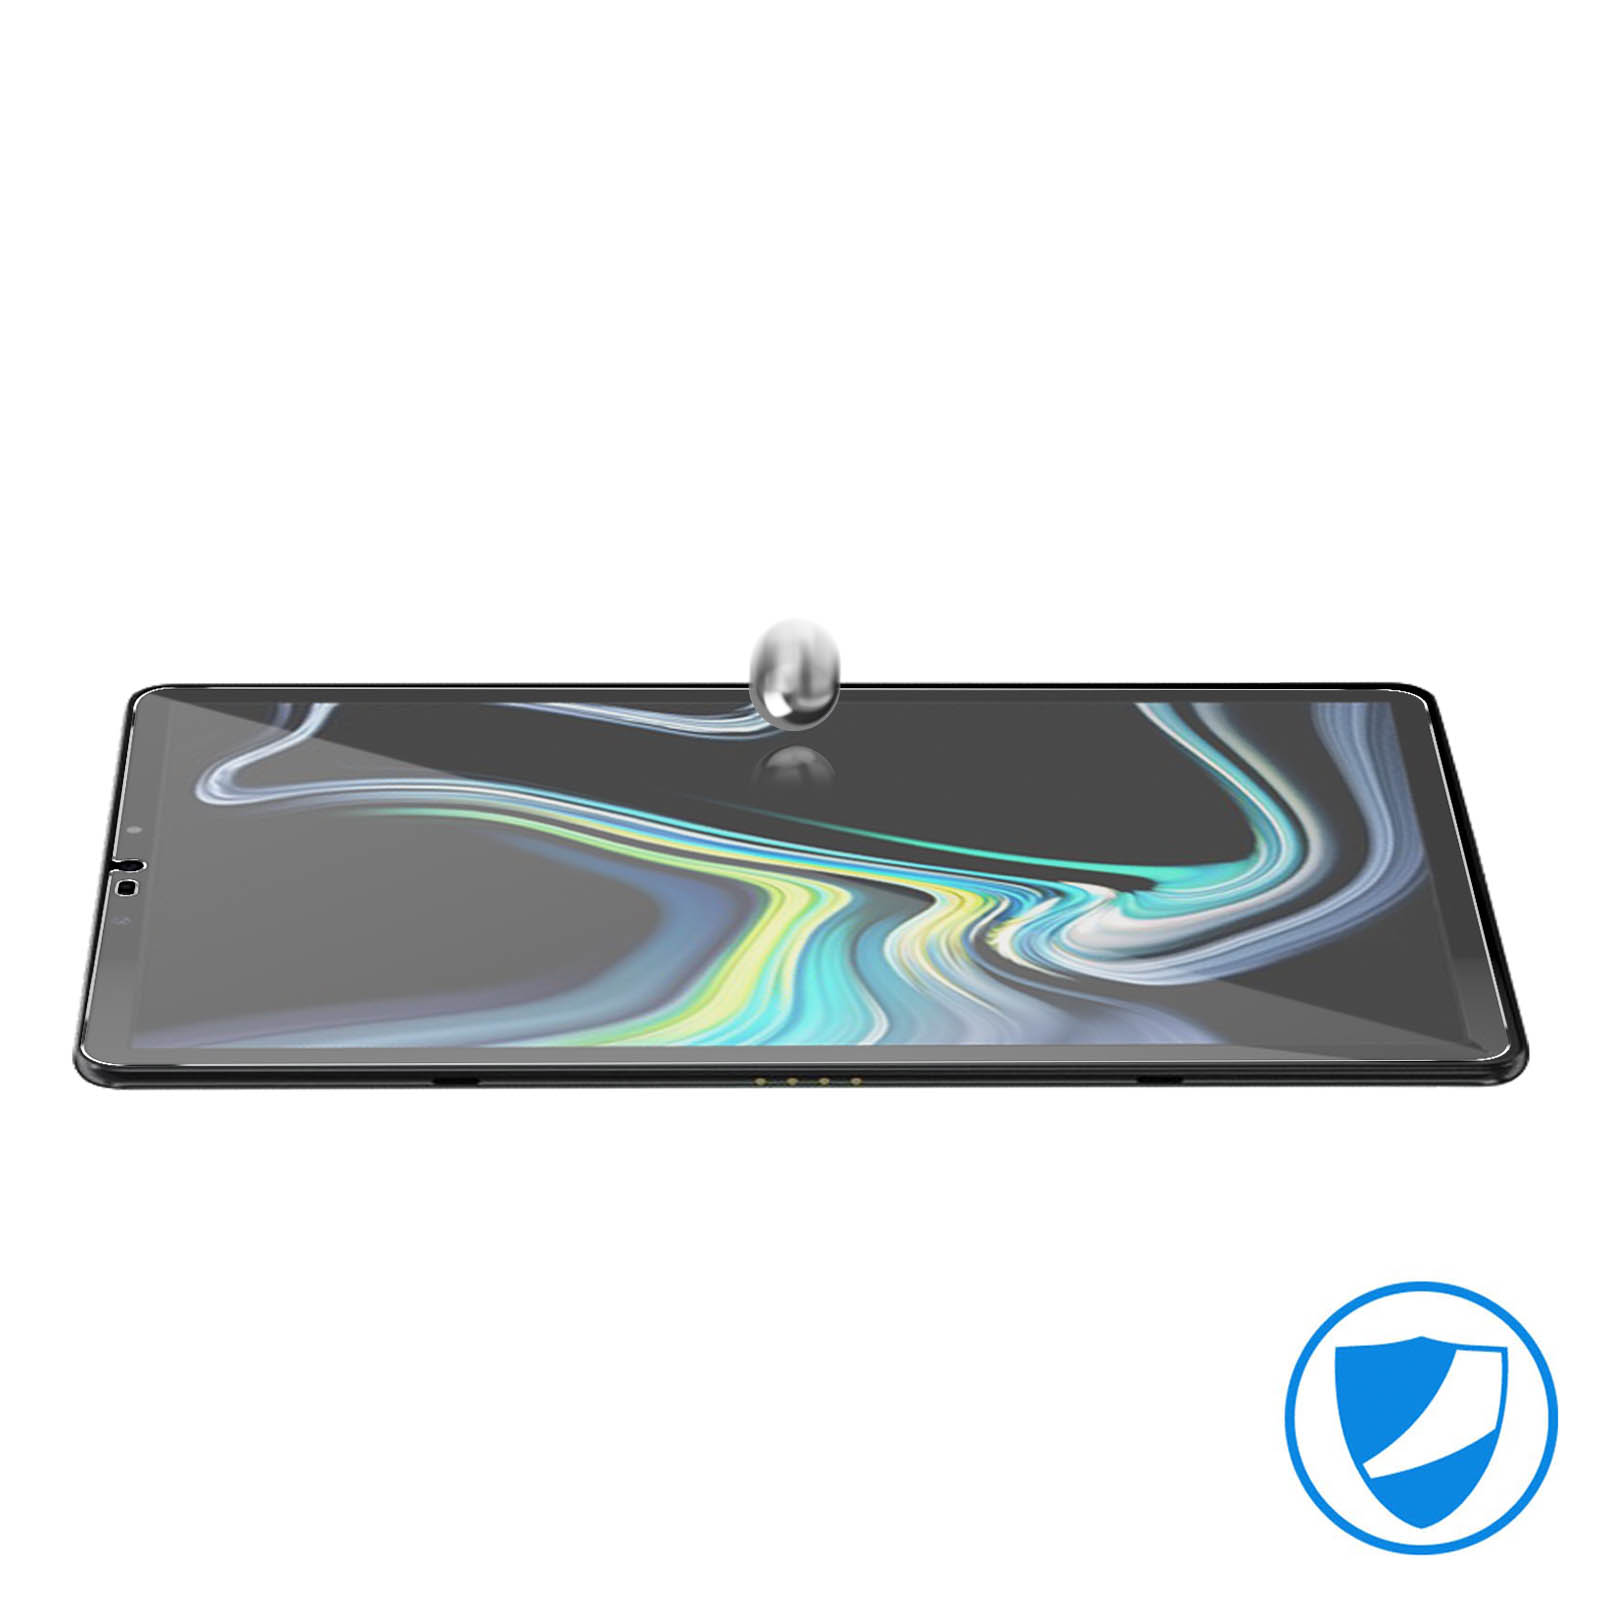 Façade de protection en verre trempé pour Samsung Galaxy S4